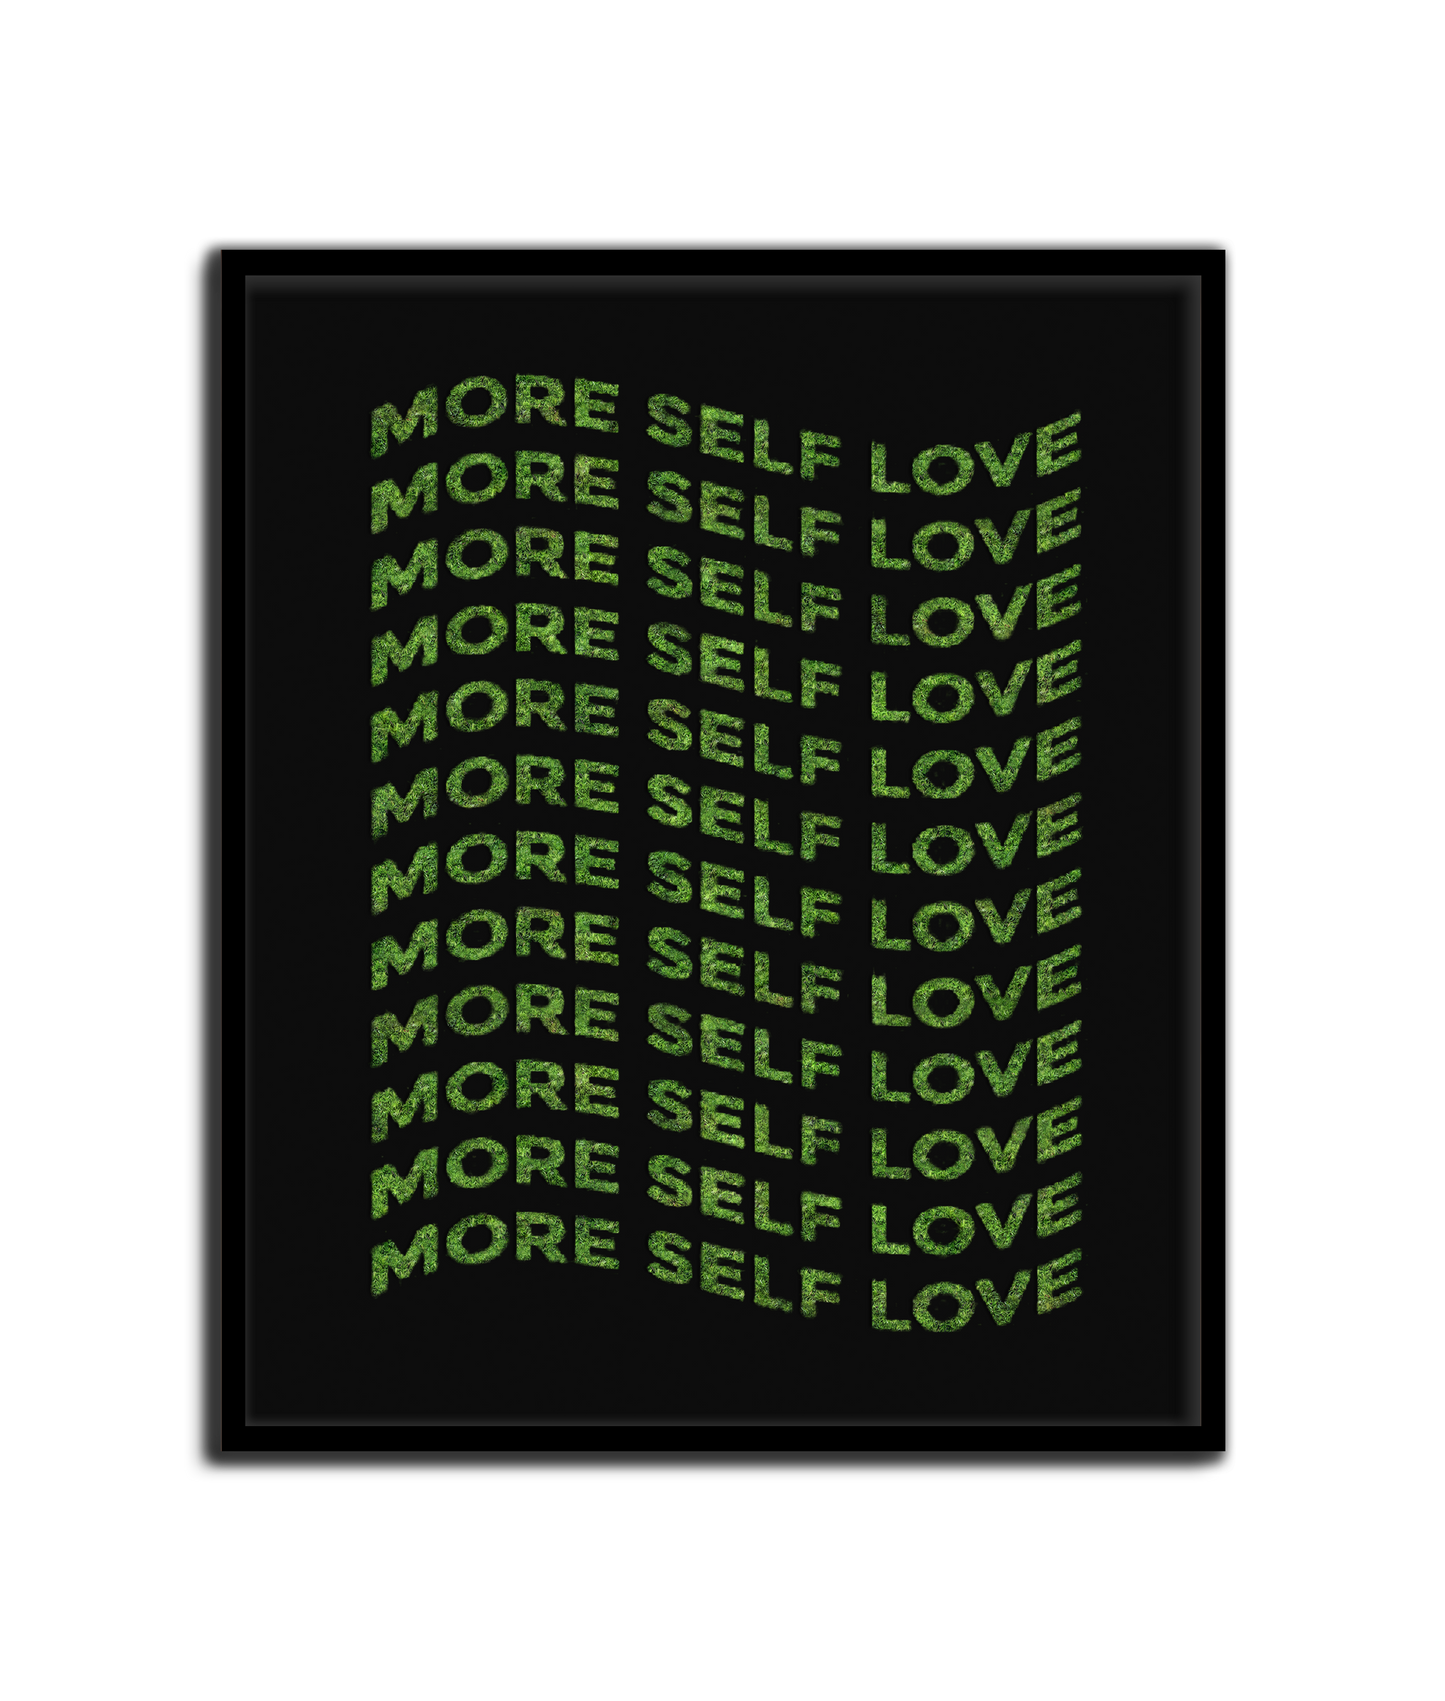 MORE SELF LOVE